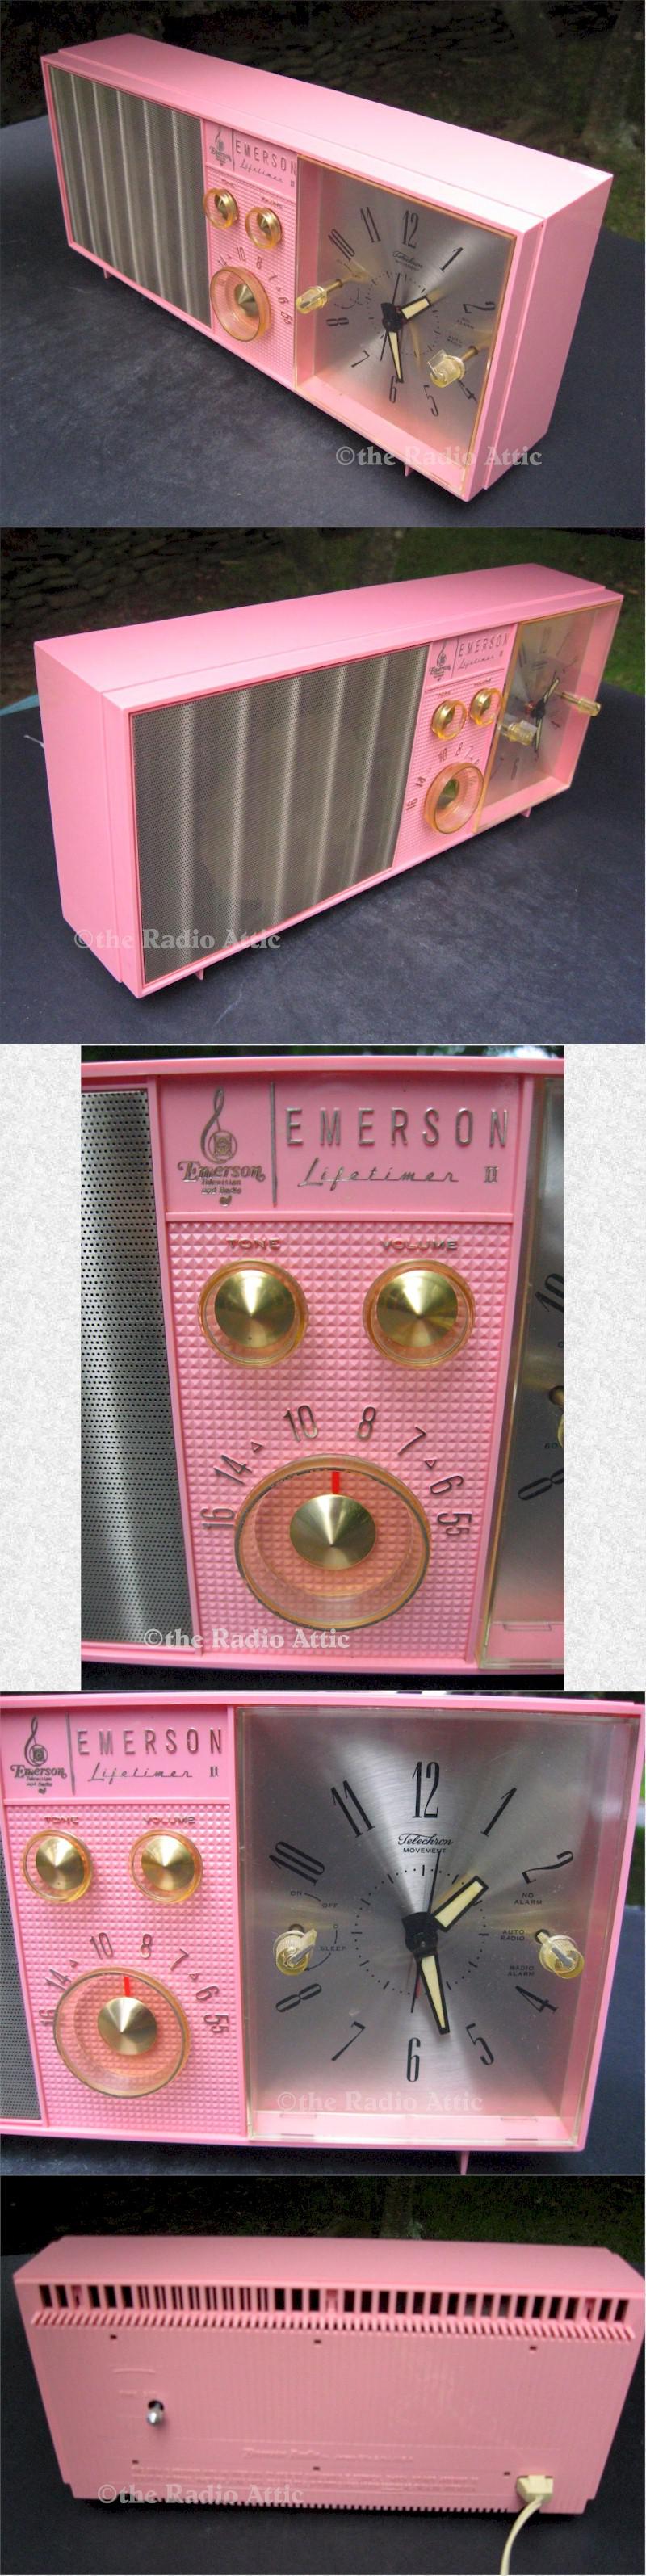 Emerson 31L04 "Lifetimer" Clock Radio (1962)